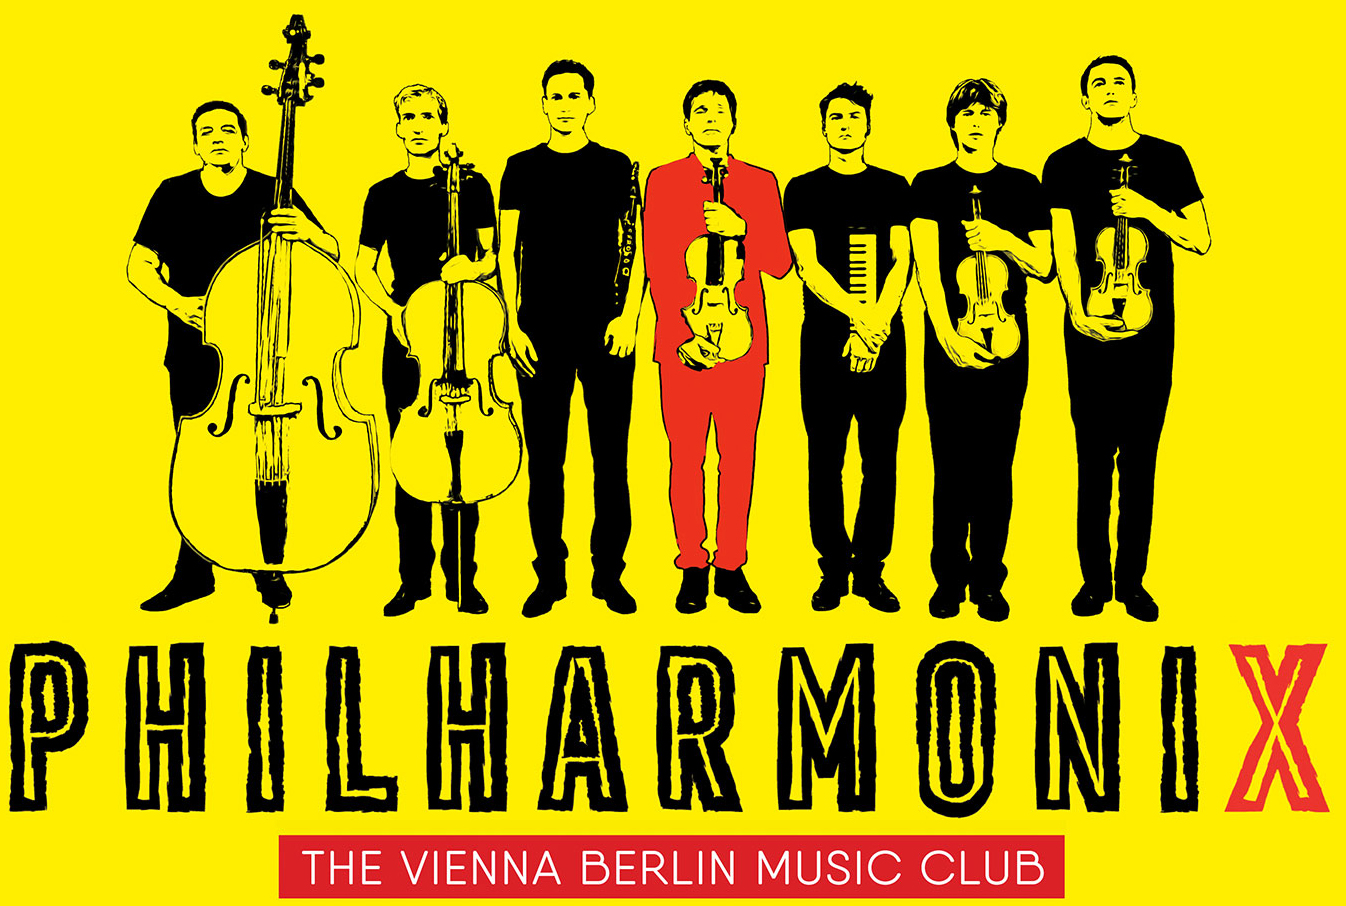 Philharmonix Vol. 3